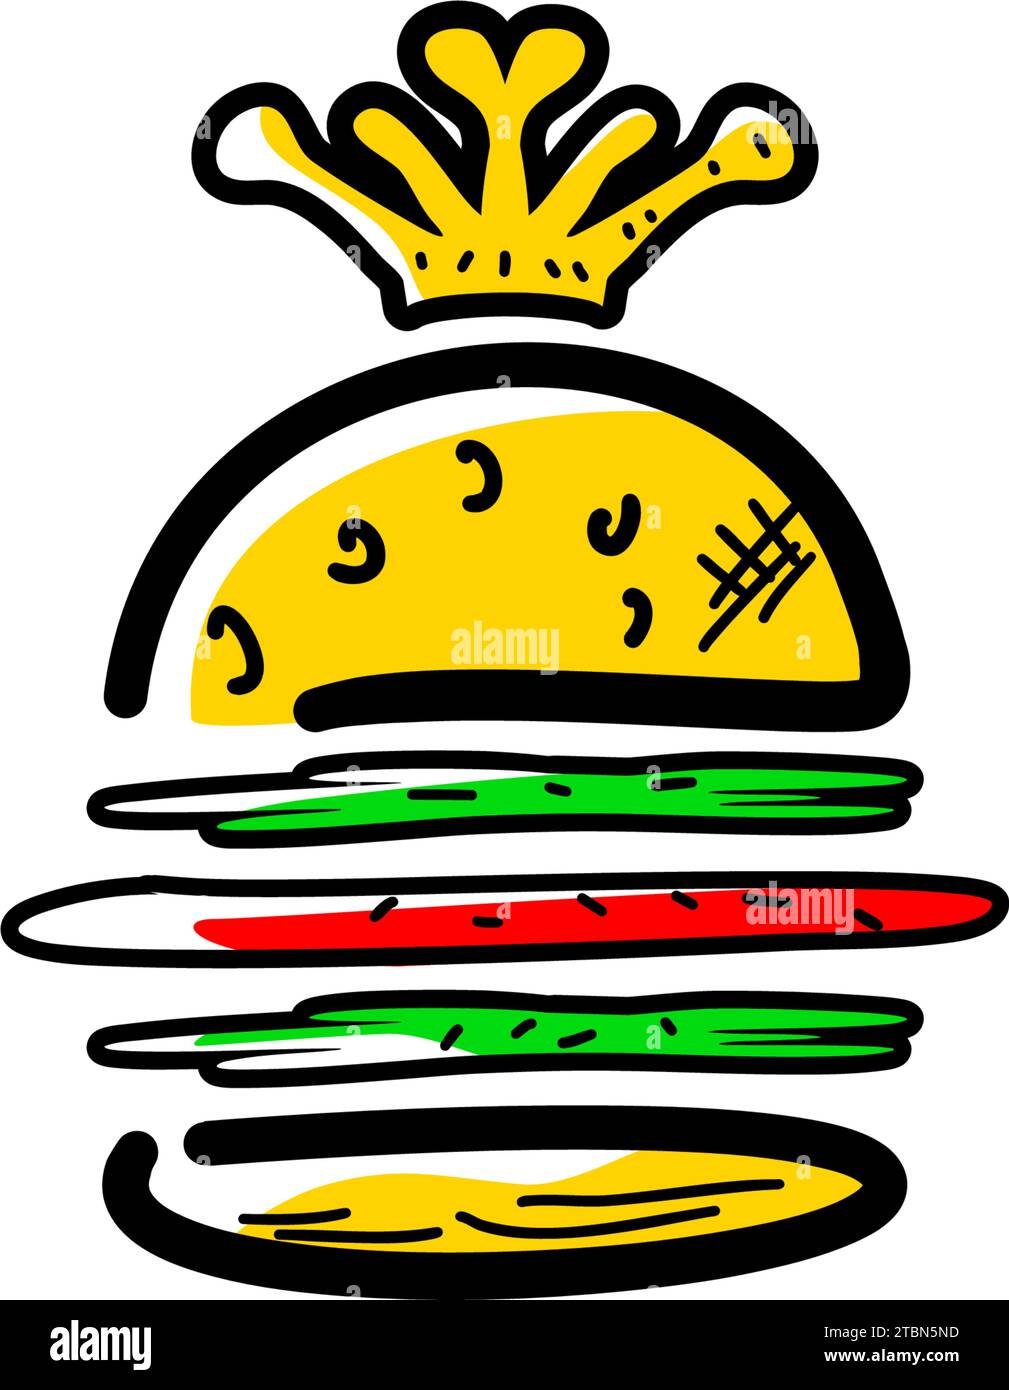 Design-Element Mit King Burger-Vektor-Logo Stock Vektor